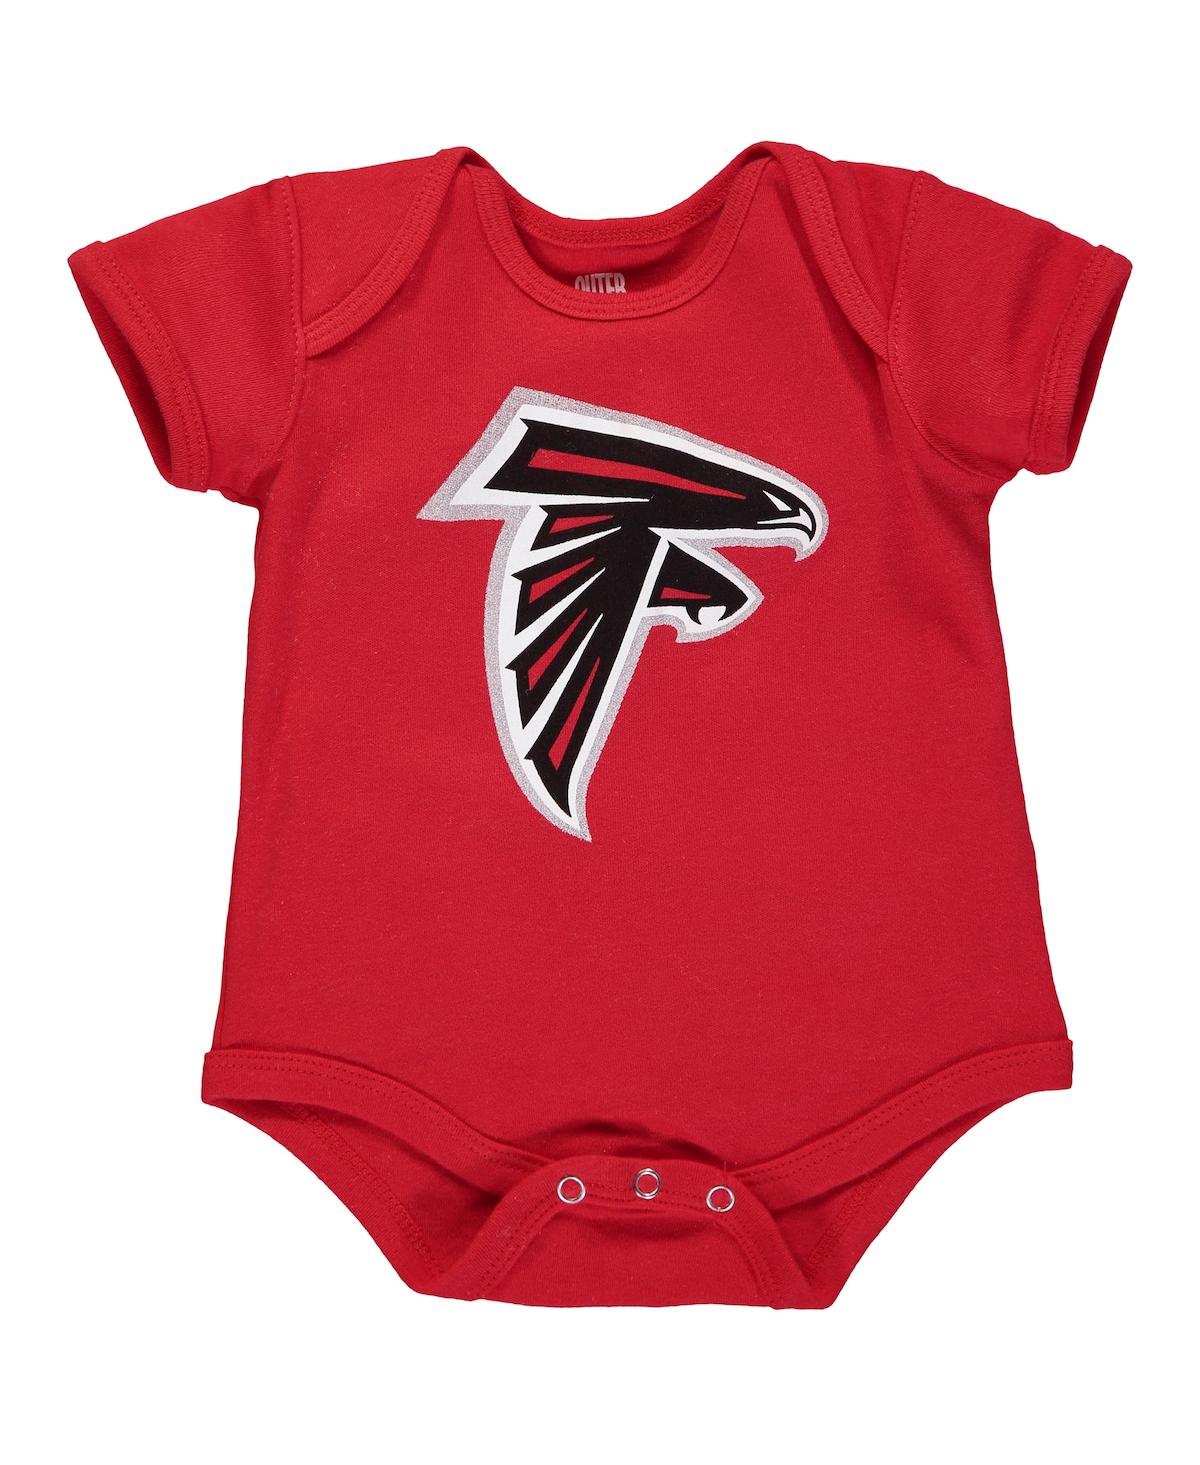 Outerstuff Babies' Newborn Boys And Girls Red Atlanta Falcons Team Logo Bodysuit